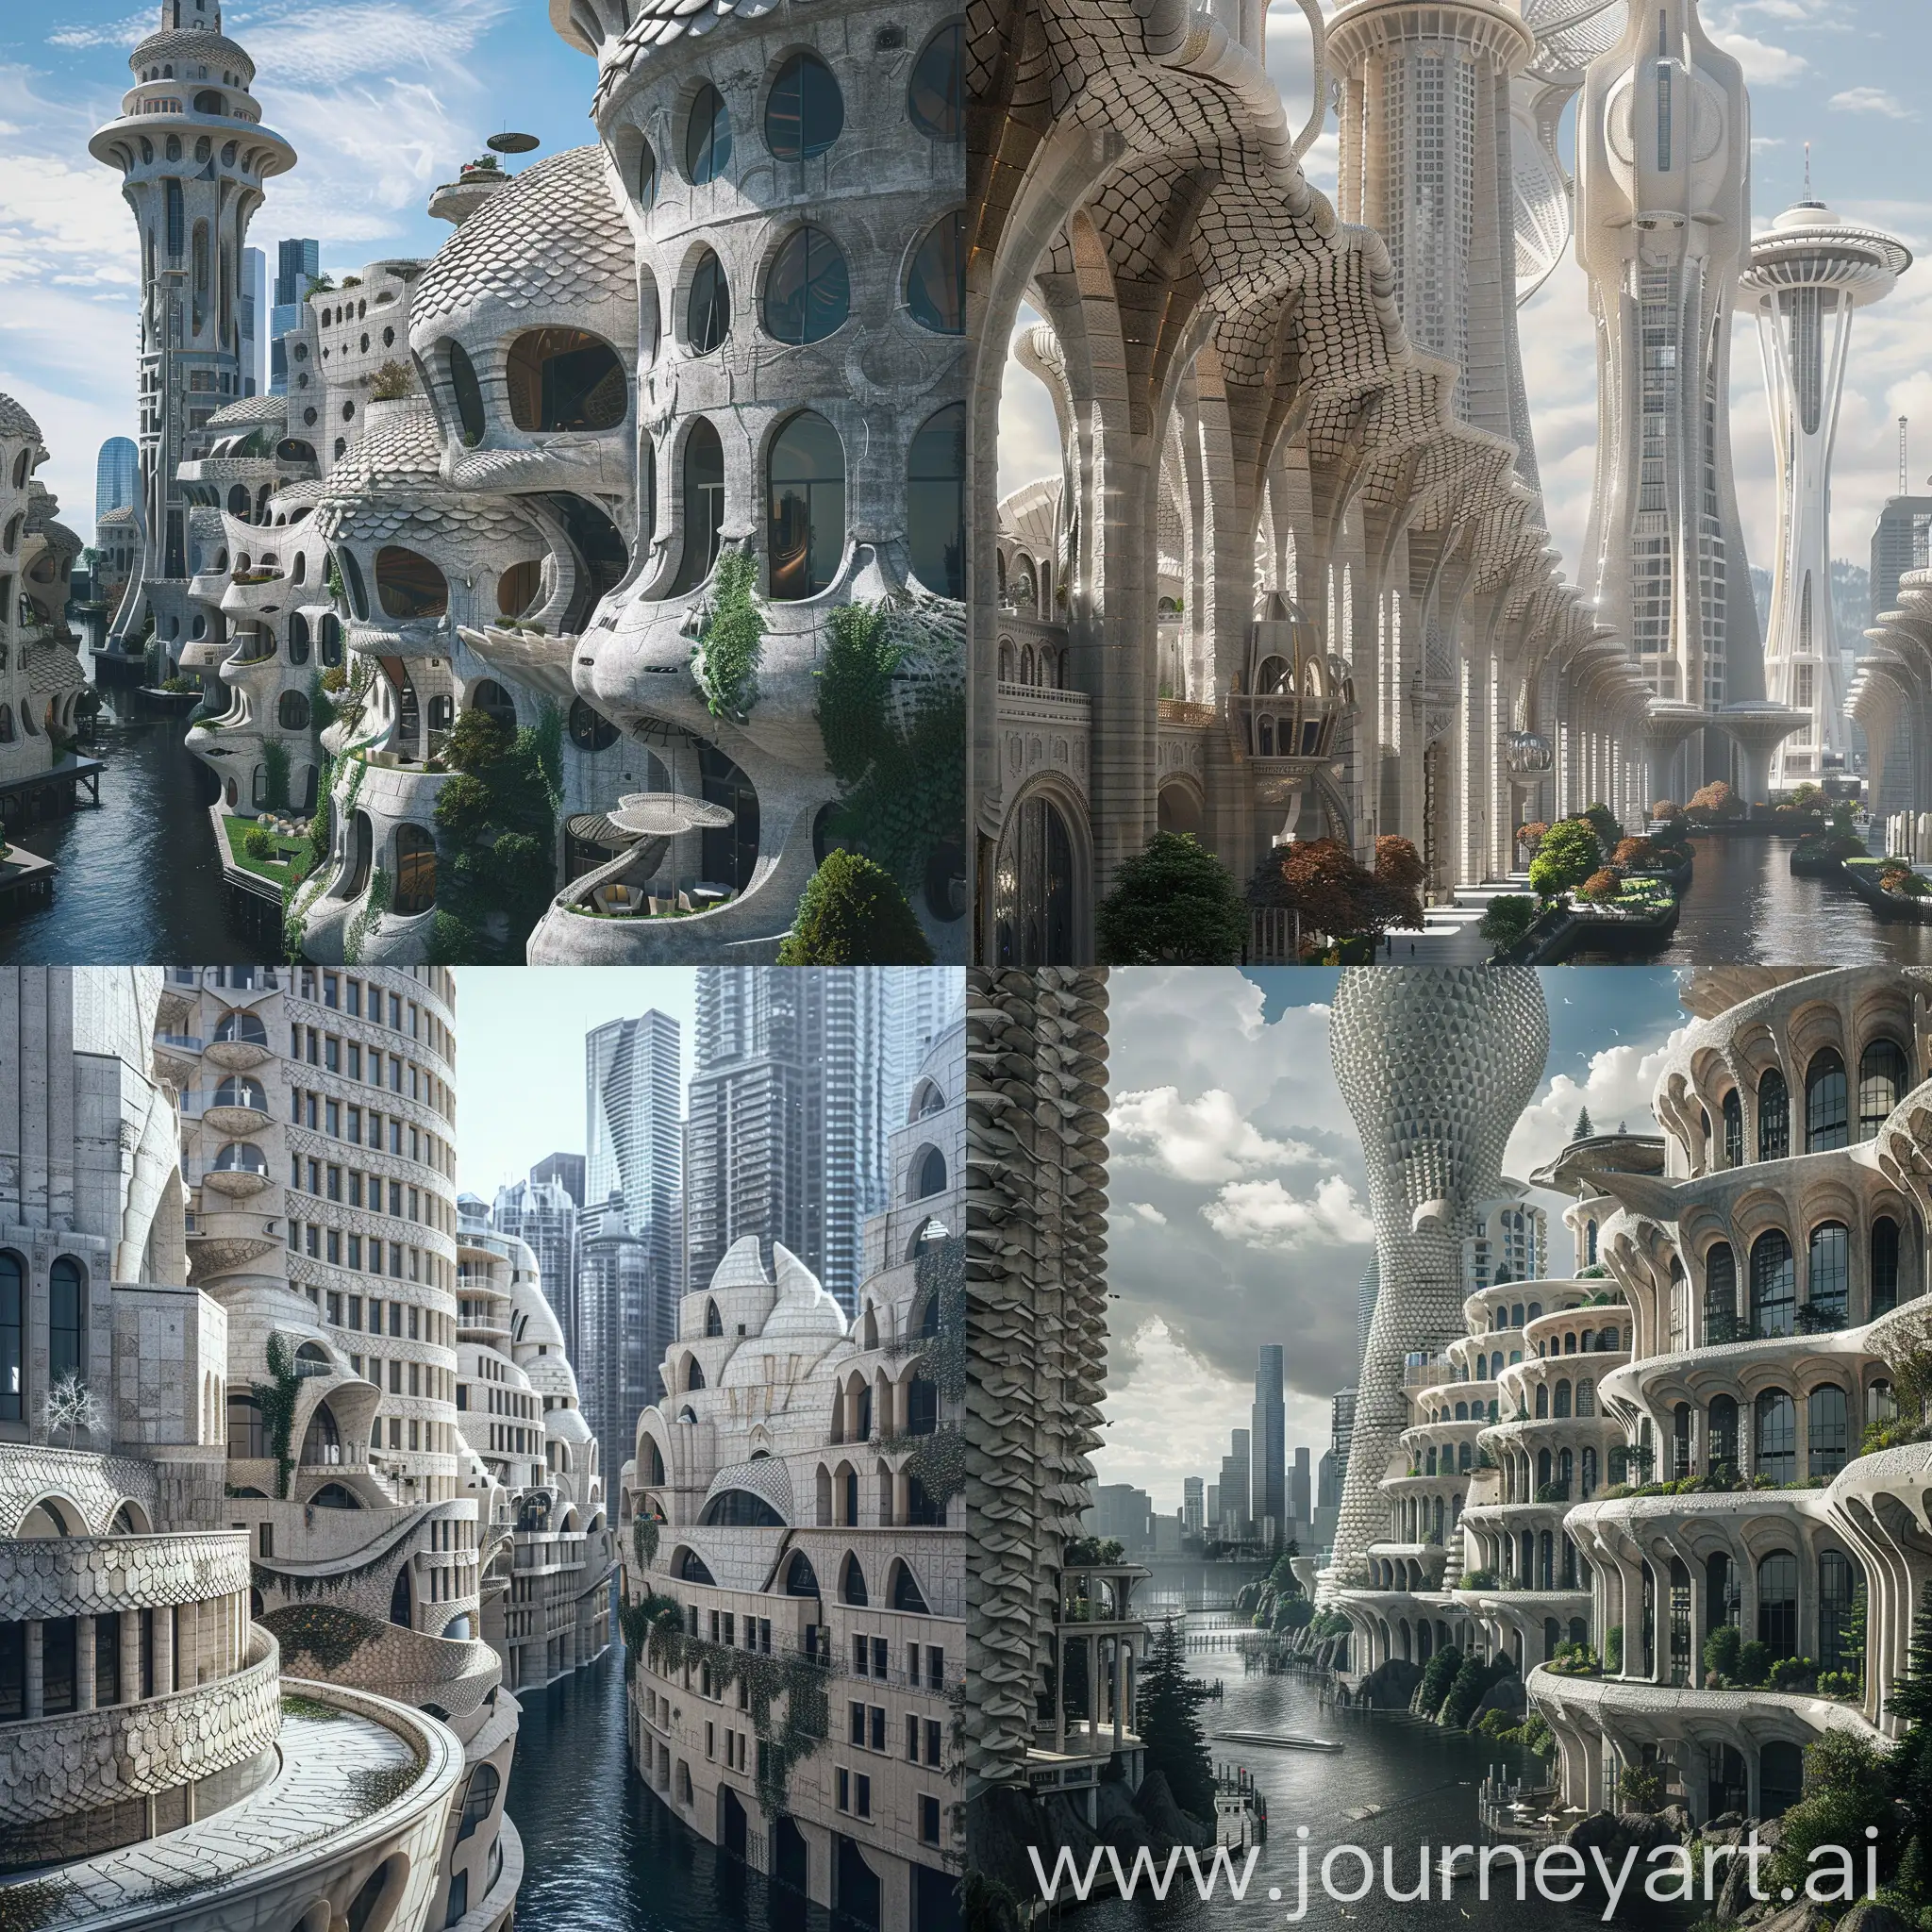 Futuristic-Metropolis-with-Ornate-Travertine-Architecture-and-Terraced-Skyscrapers